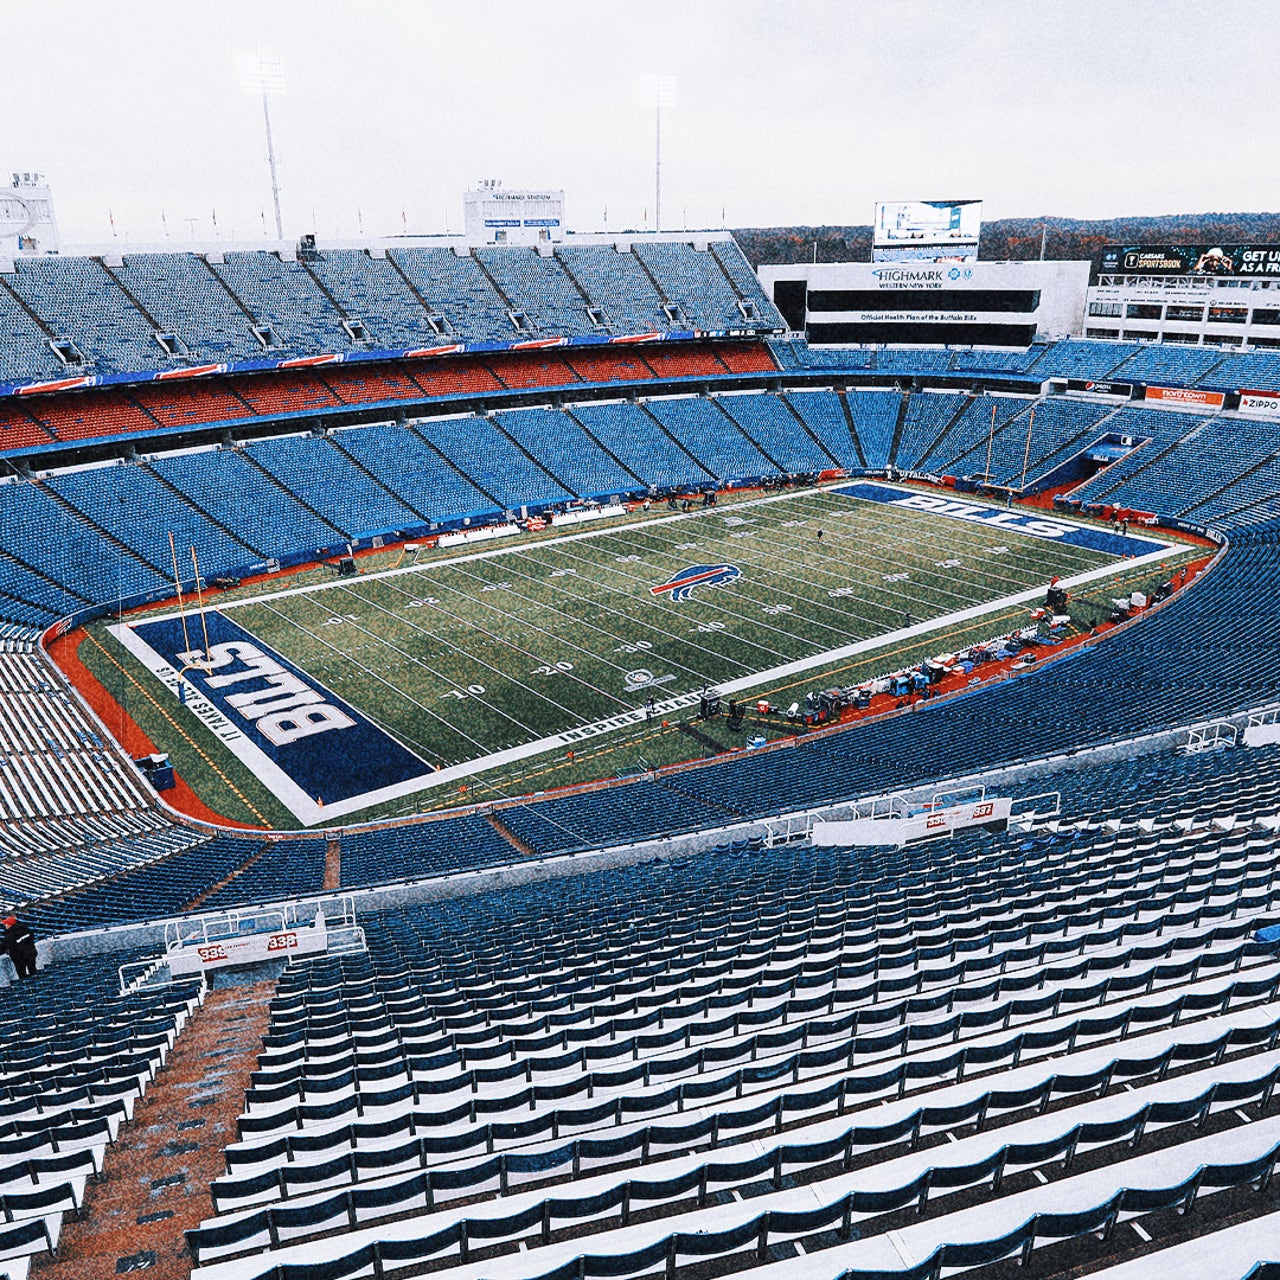 Step Inside: Highmark Stadium - Home of the Buffalo Bills